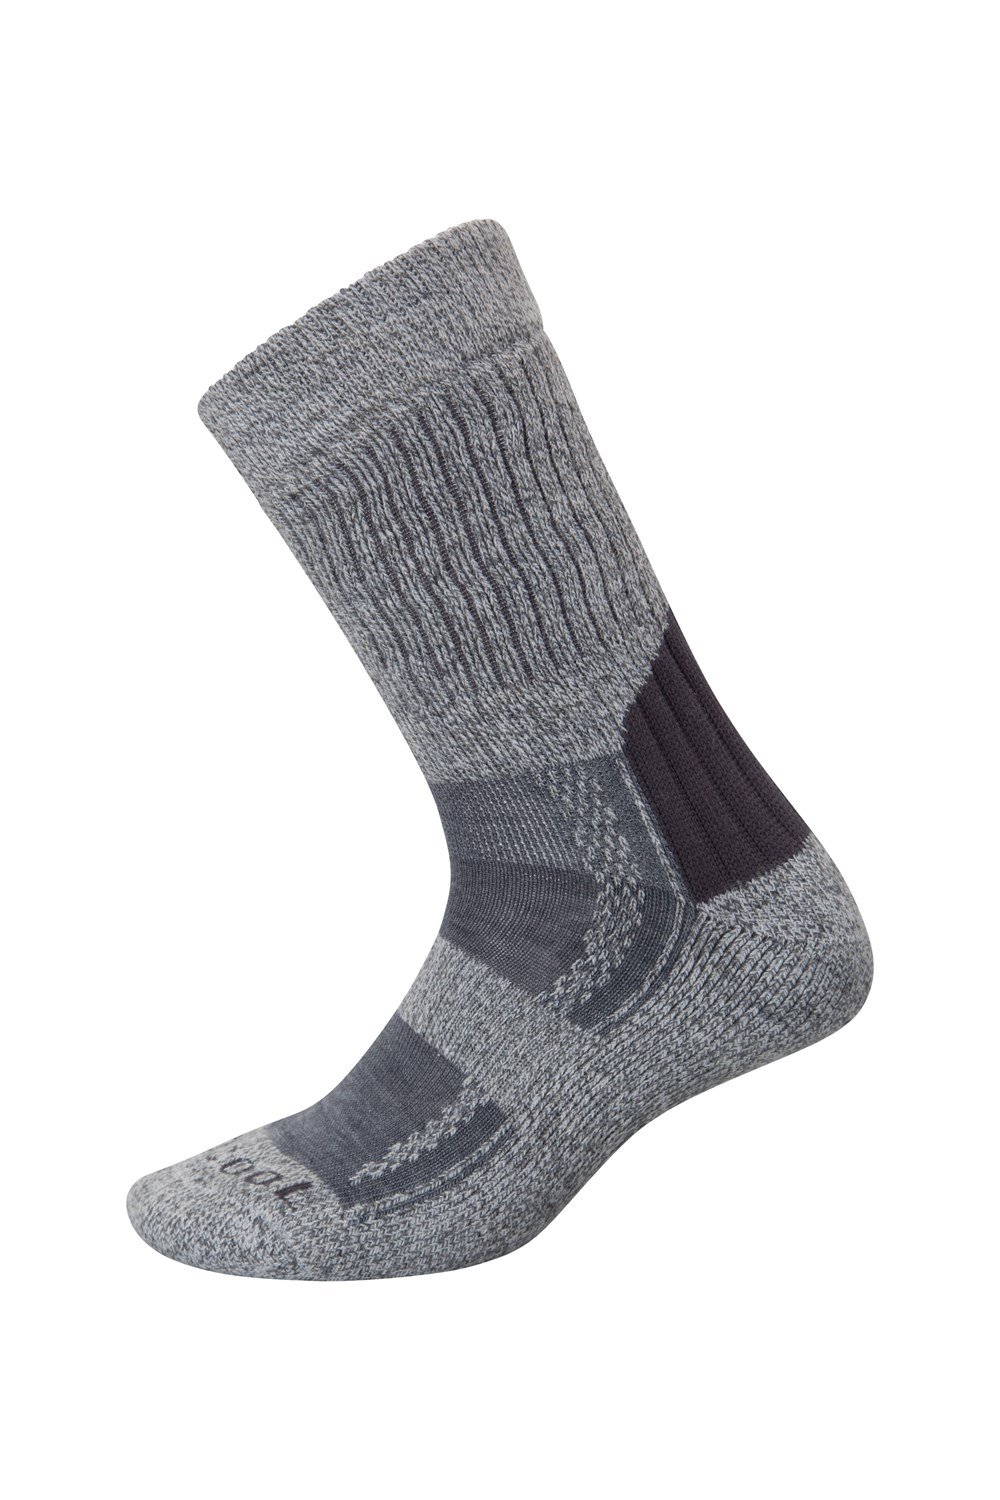 Mountain Warehouse Isocool Mens Walker Socks with Fine Toe Seams | eBay